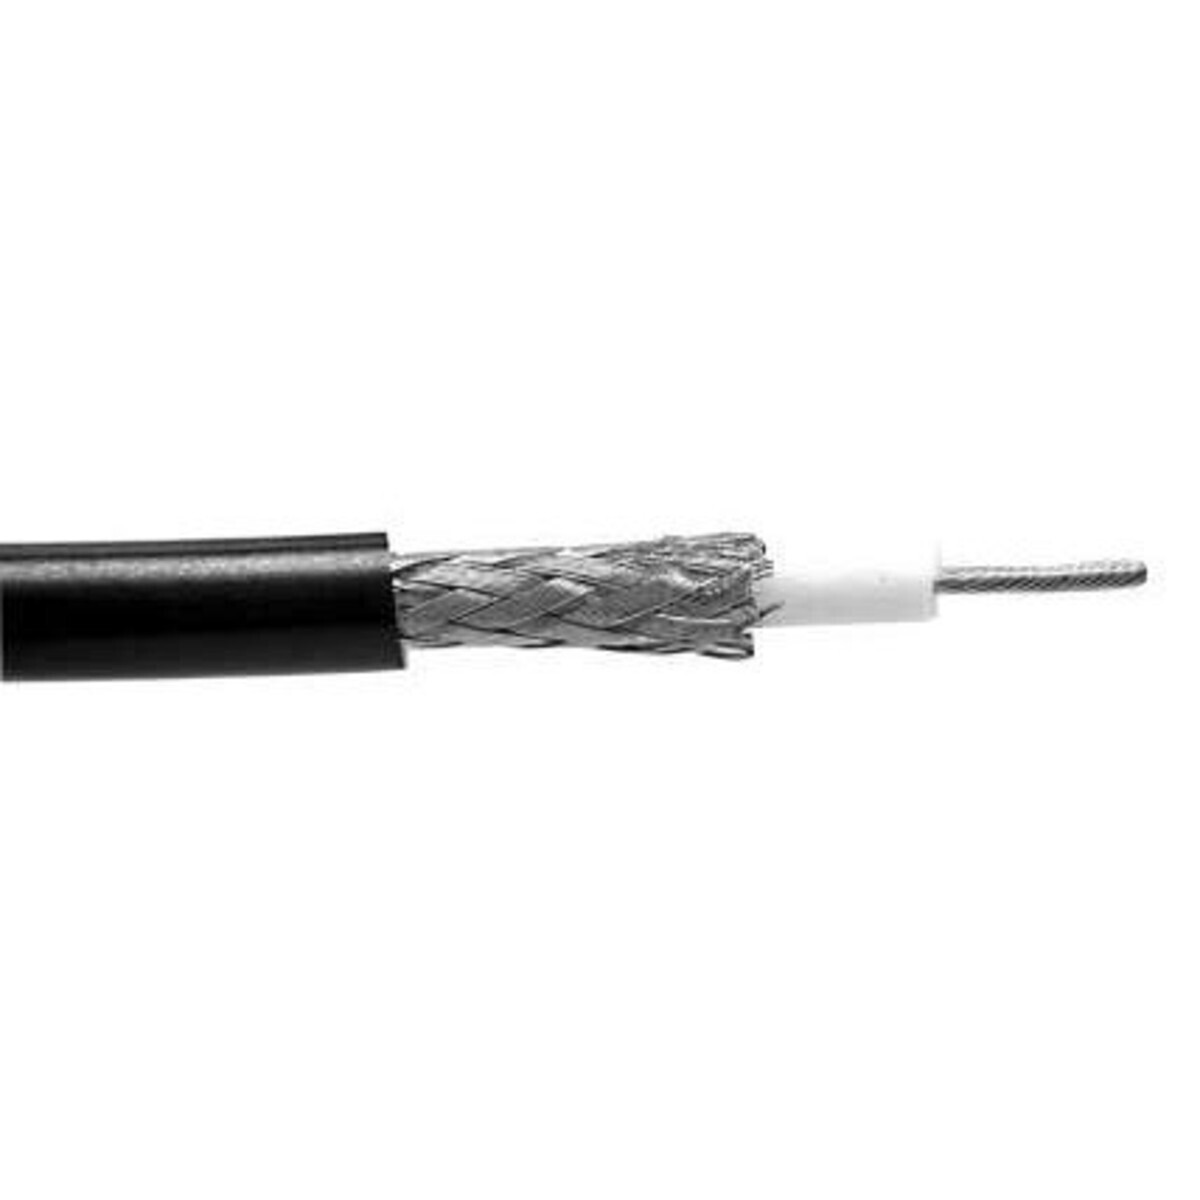 RFI RG58 9001 Cellfoam 50 Ohm Coax Cable - 100m